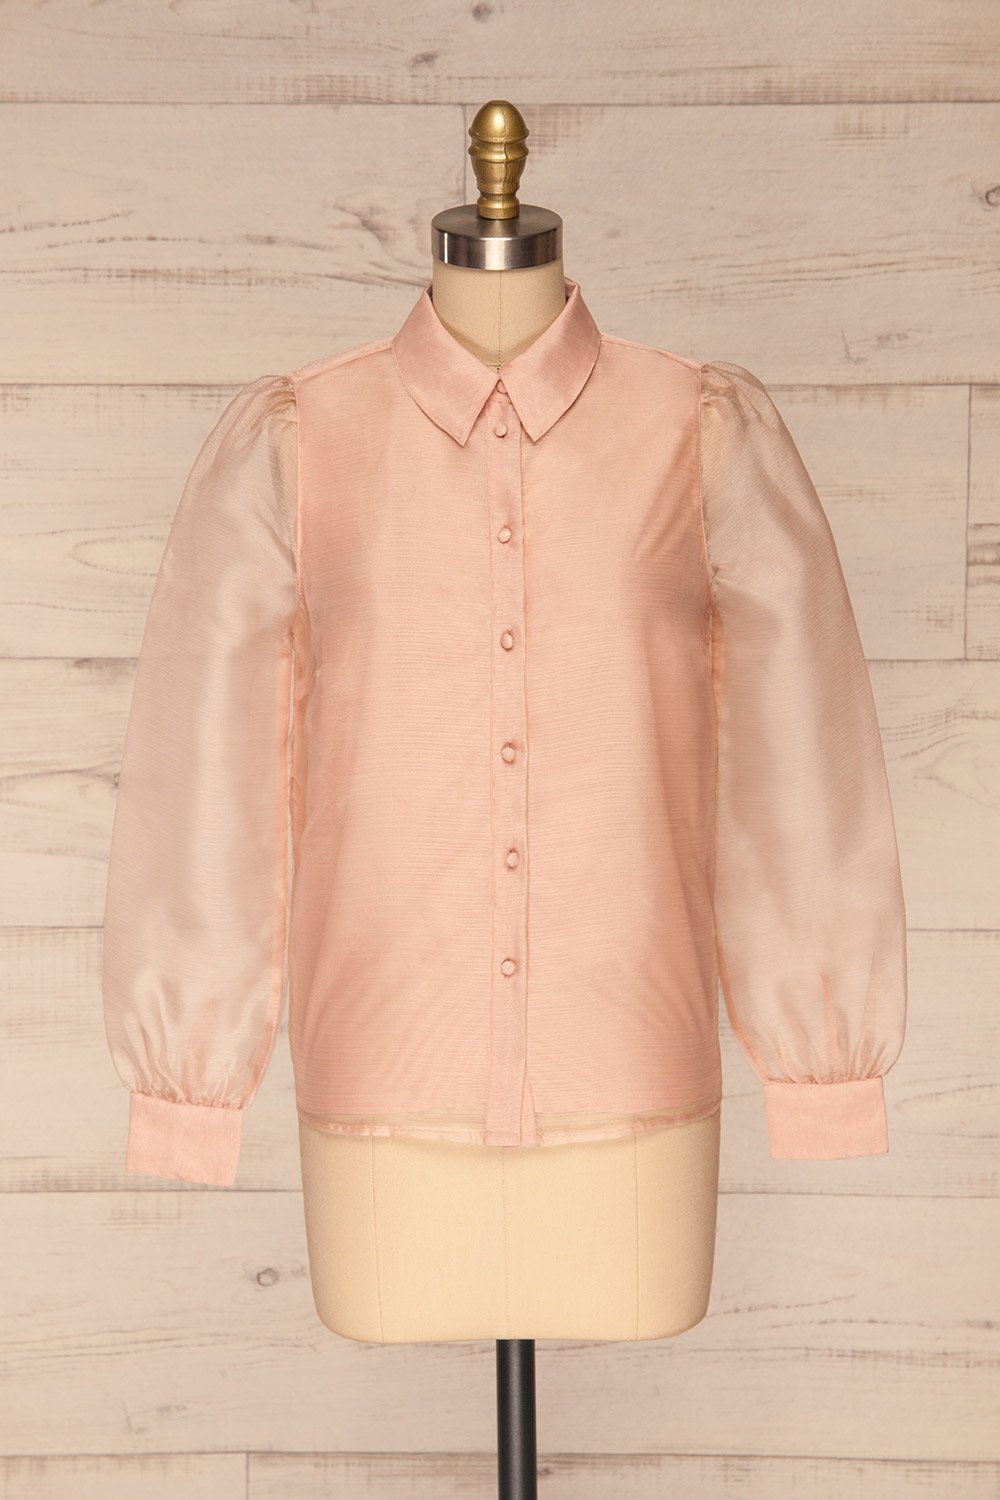 Xandra Rose Pink Tulle Shirt w/ Bow front view | La petite garçonne